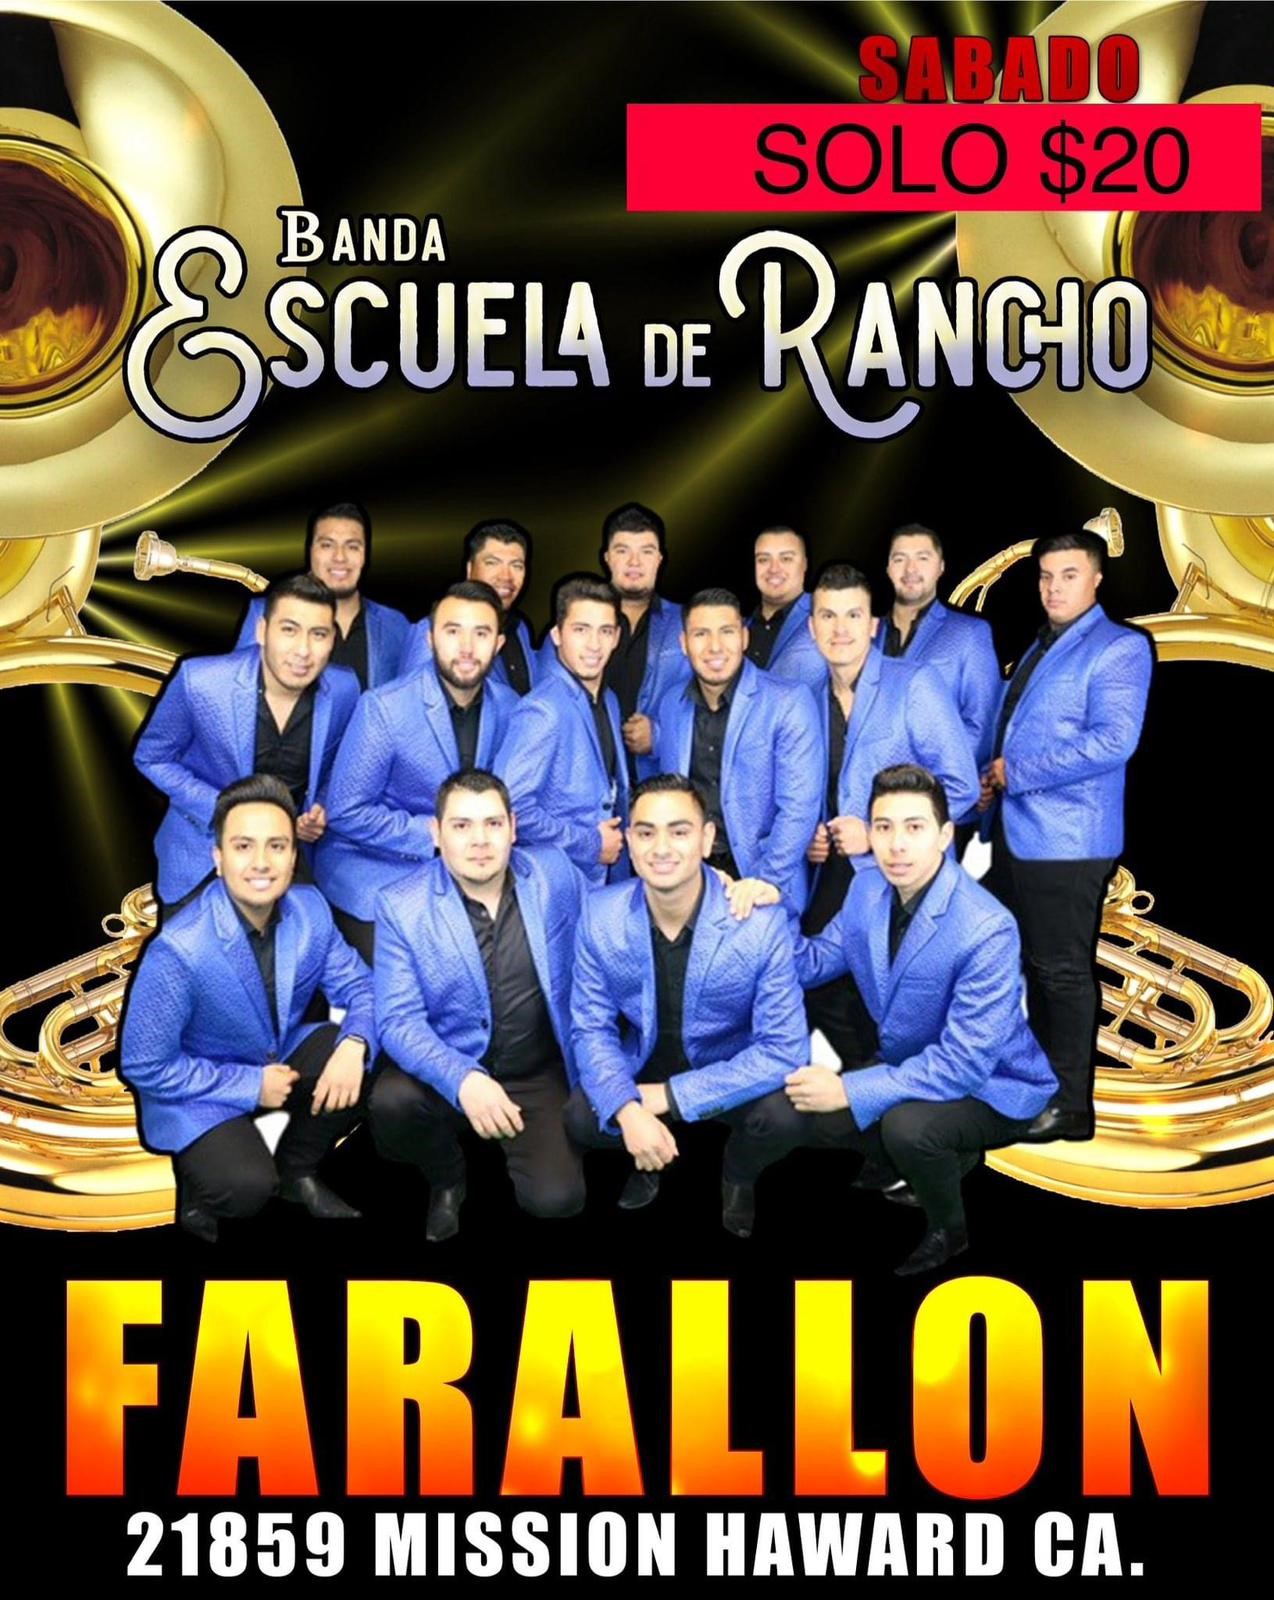 Sabado Con la Escuela de Rancho  on Jul 07, 21:00@FARALLON - Buy tickets and Get information on farallonpresenta farallonpresenta